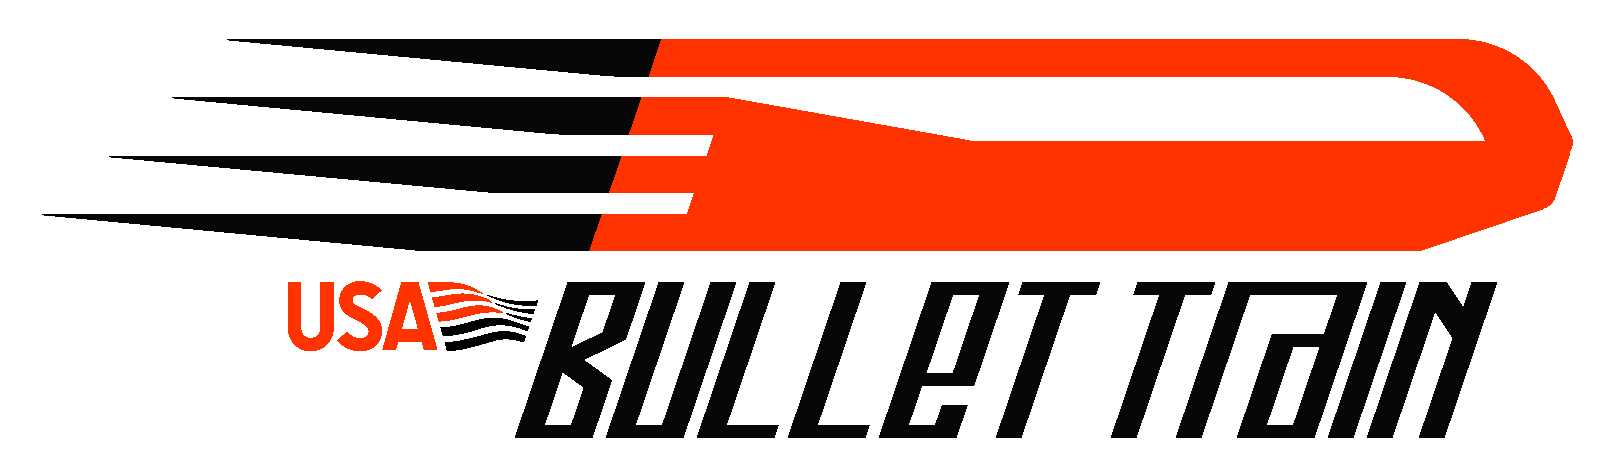 USA Bullet Train anime block logo.png